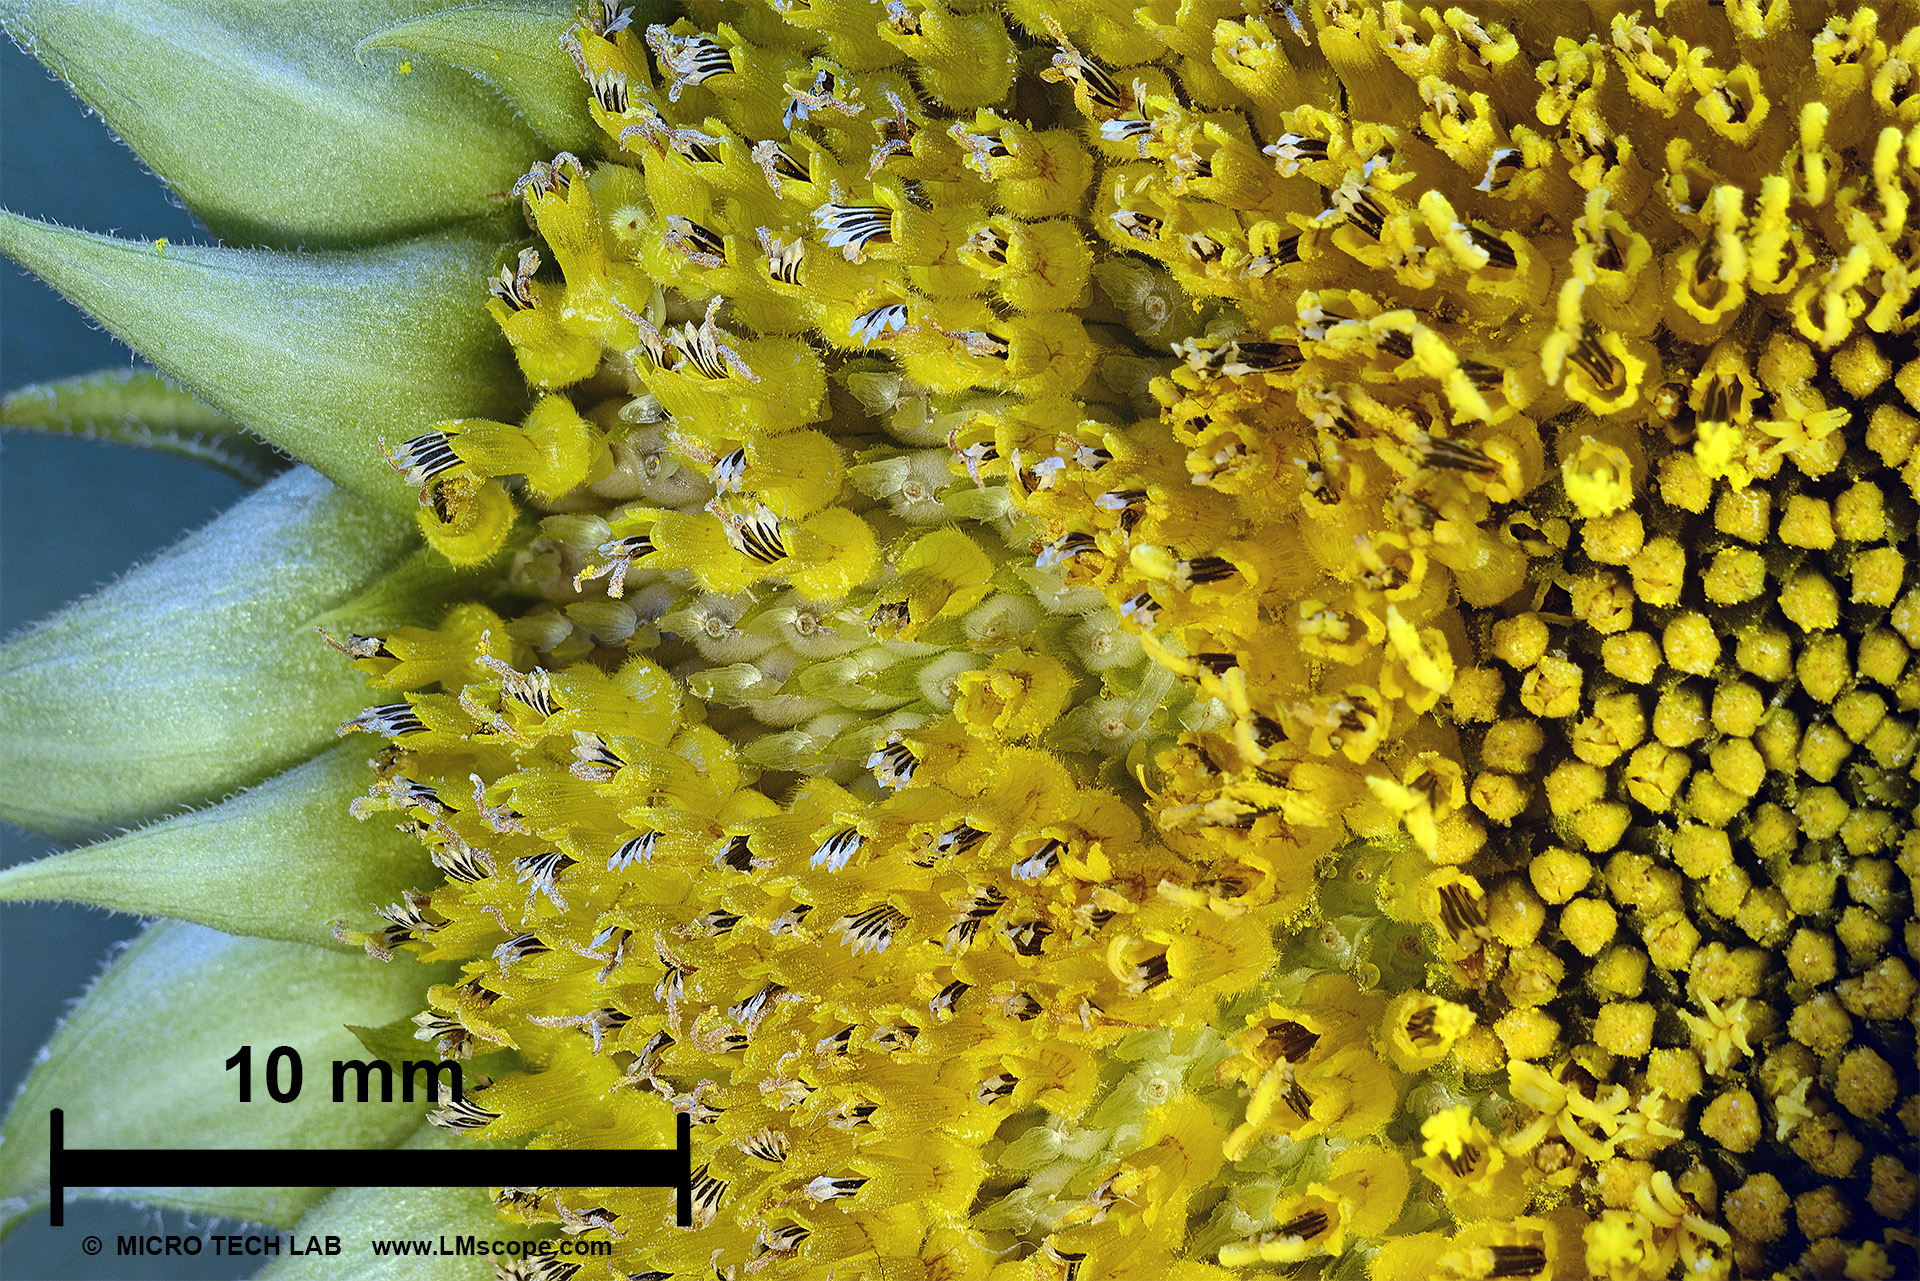 Sunflower (Helianthus annuus) - general view